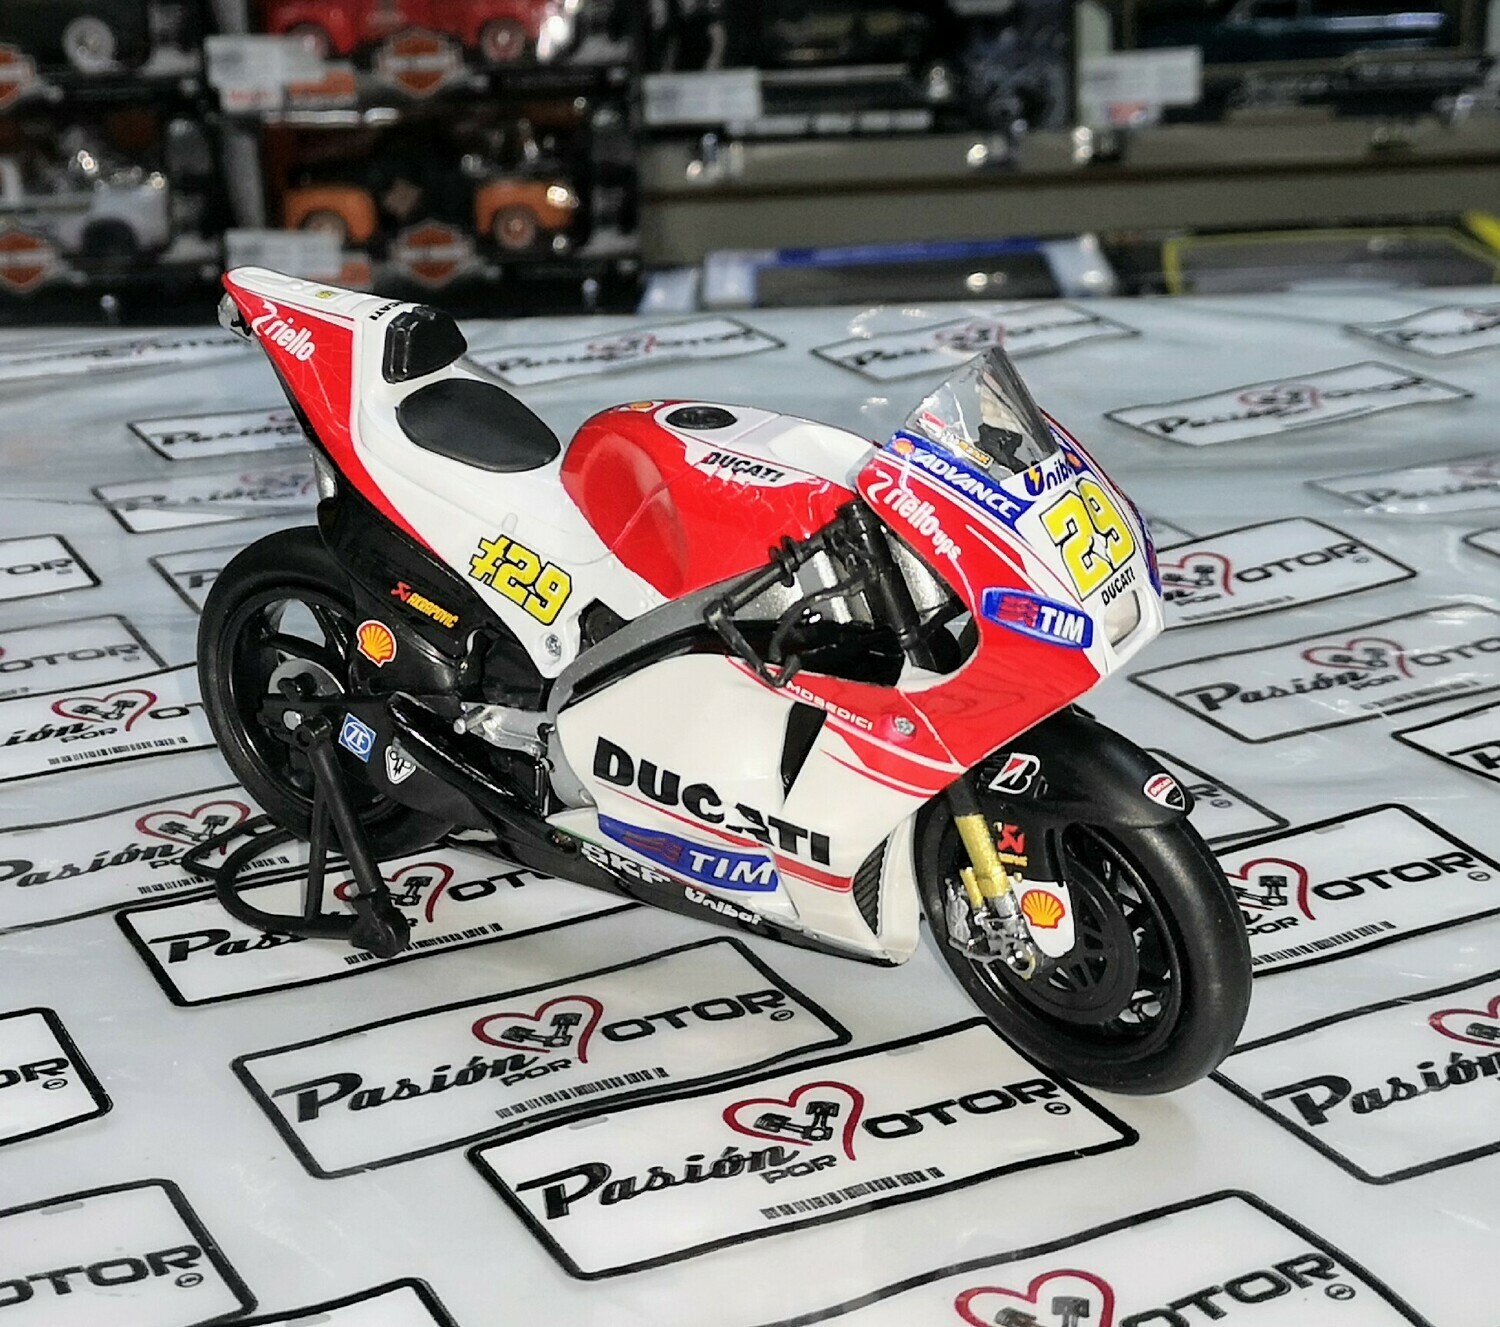 Ducati #1 Moto GP Motorcycle Model  1/12  No Stand 